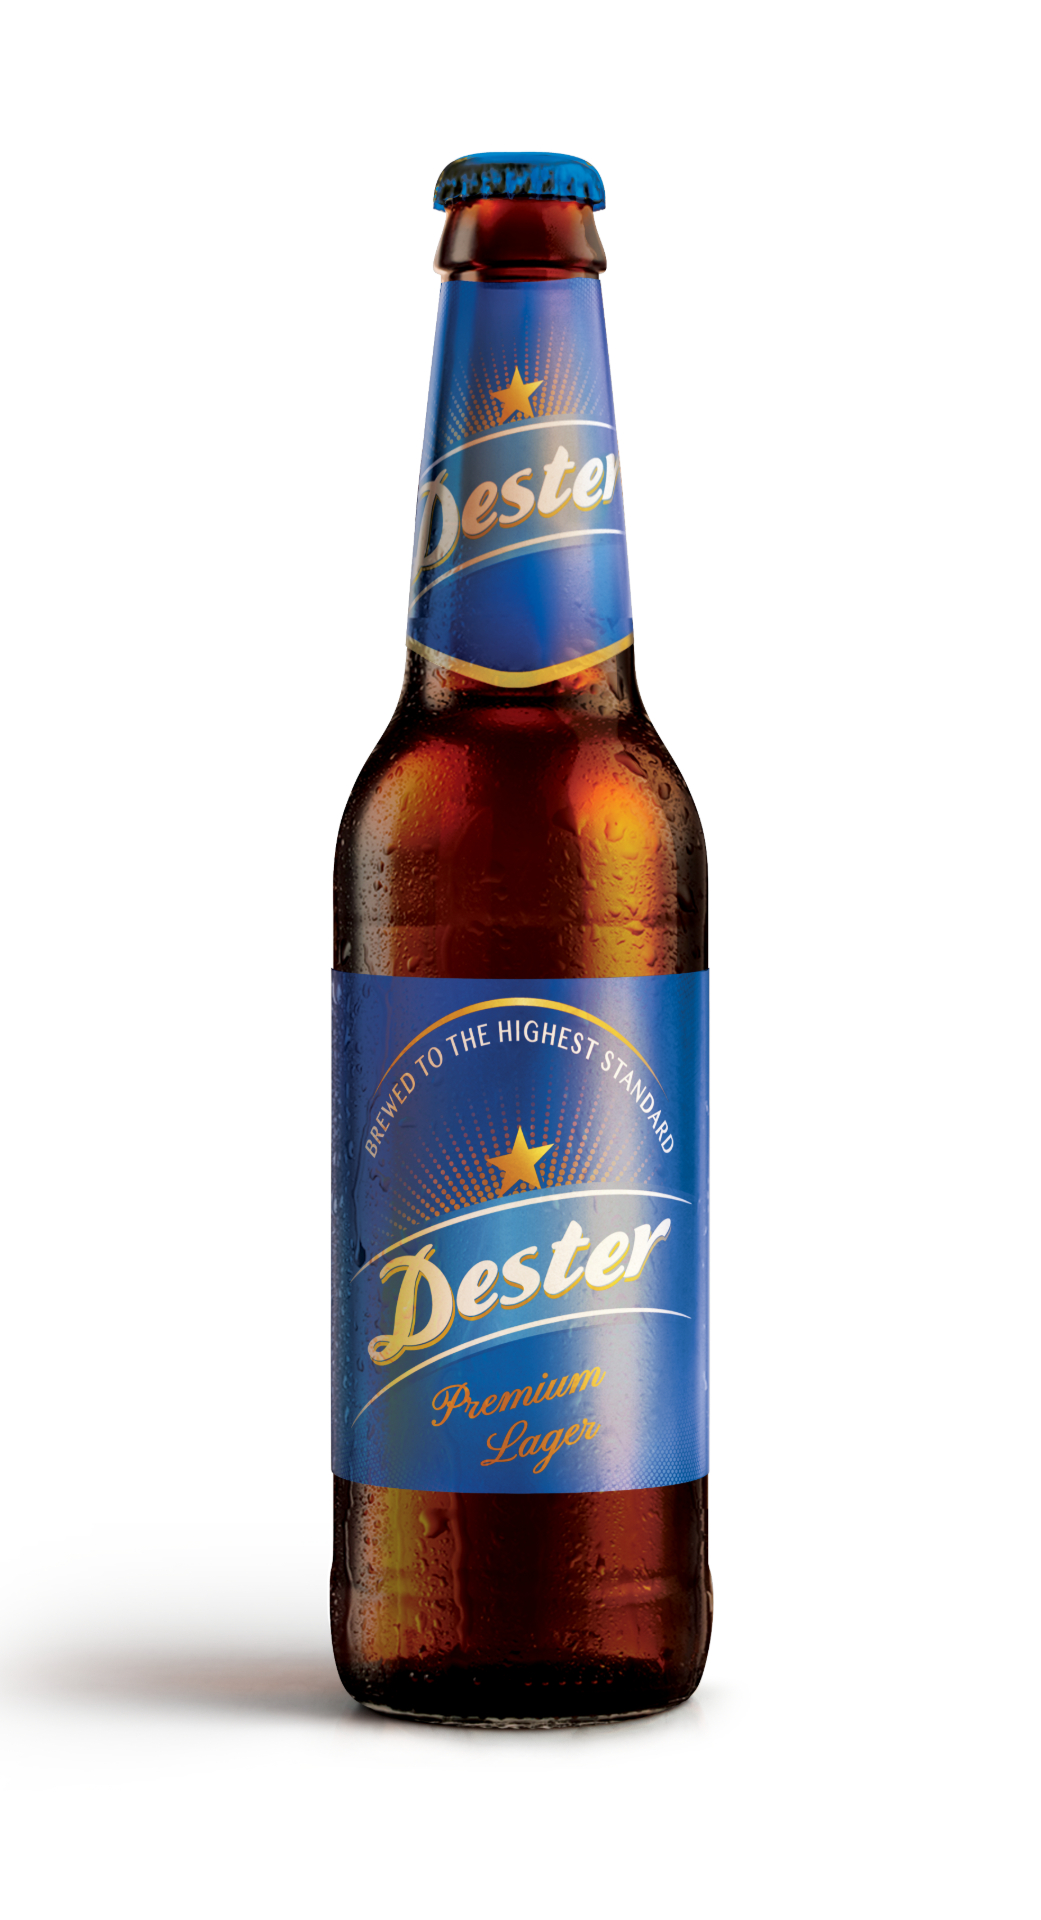 24 bottles of Dester Premium Lager Beer